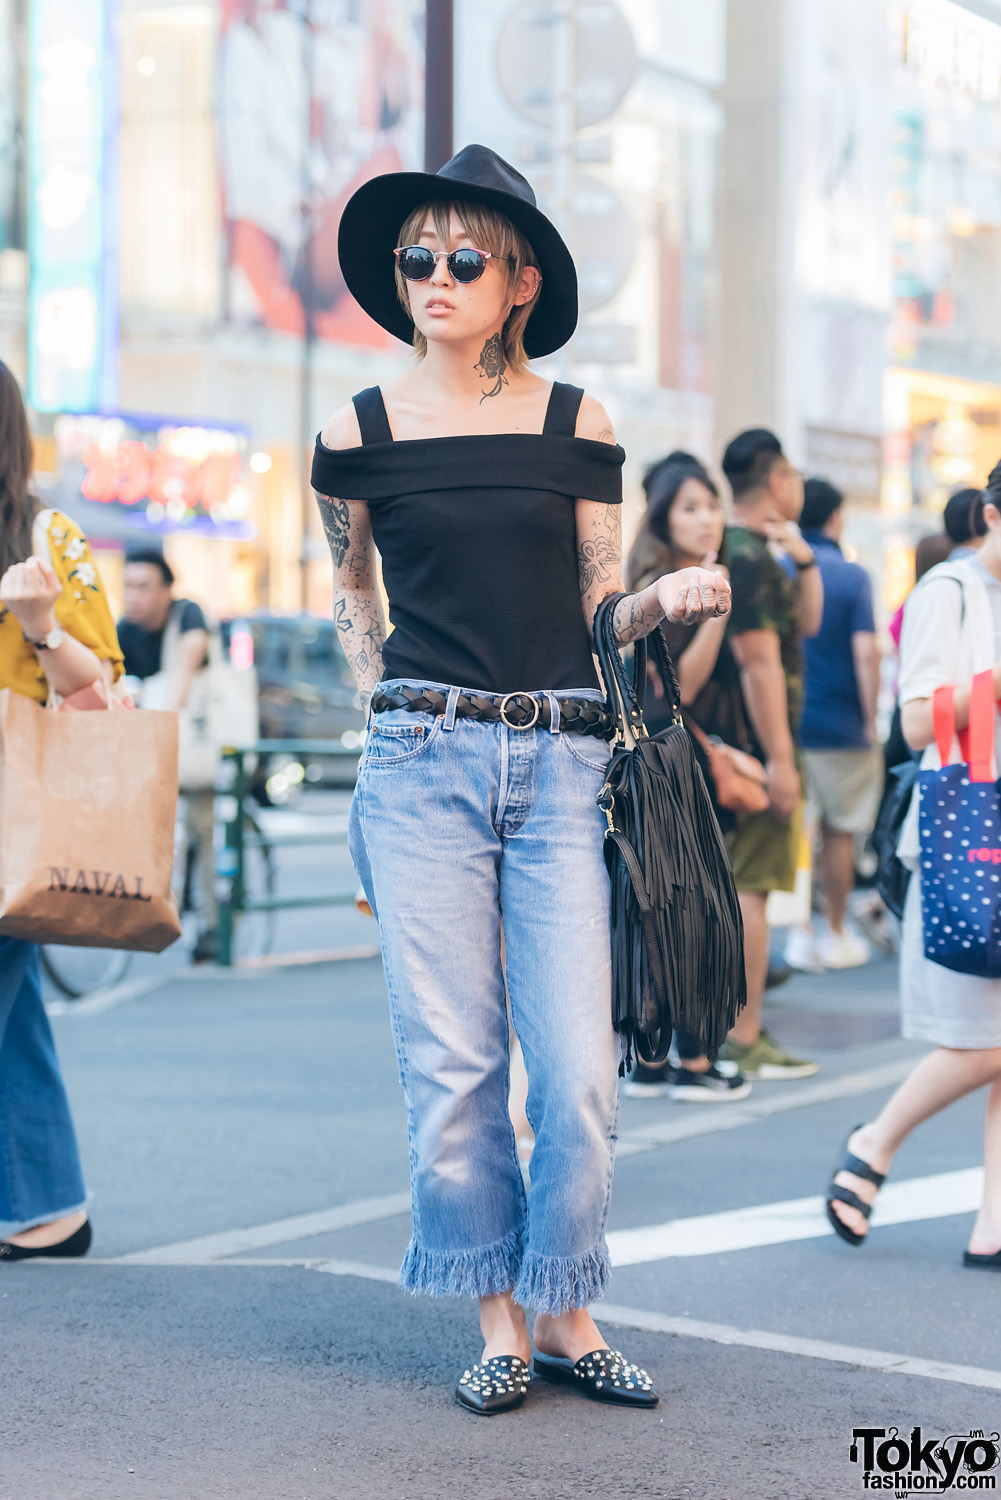 Tattooed Harajuku Girl in Emoda Off Shoulder Top, Fringe Denim & Wide Brim Hat